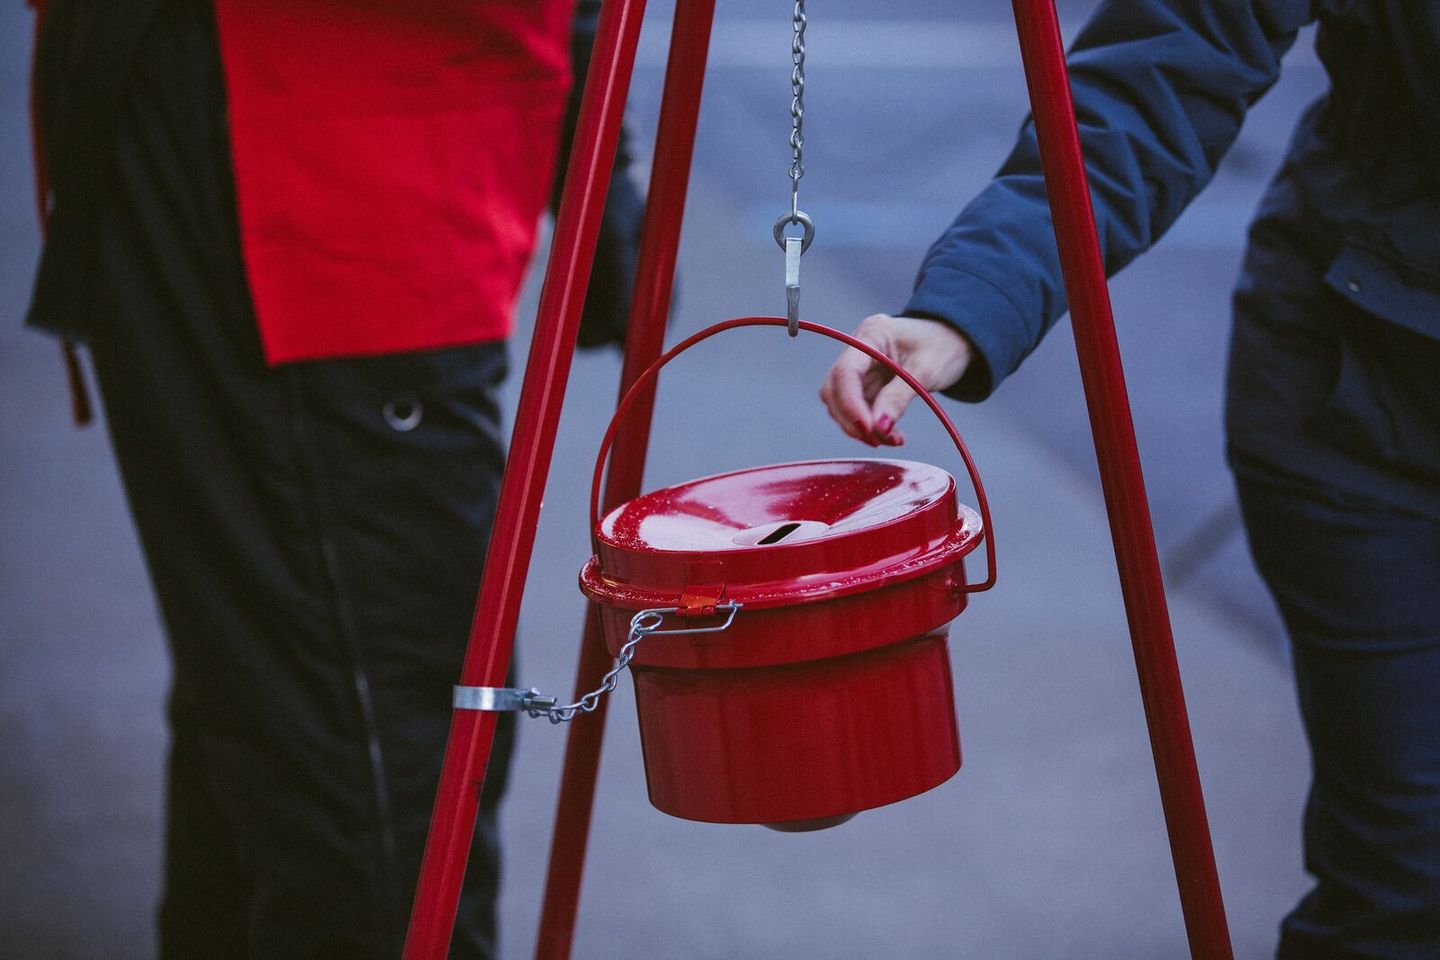 Salvation Army turun 8% saat liburan dengan permintaan tinggi semakin dekat, kata pejabat